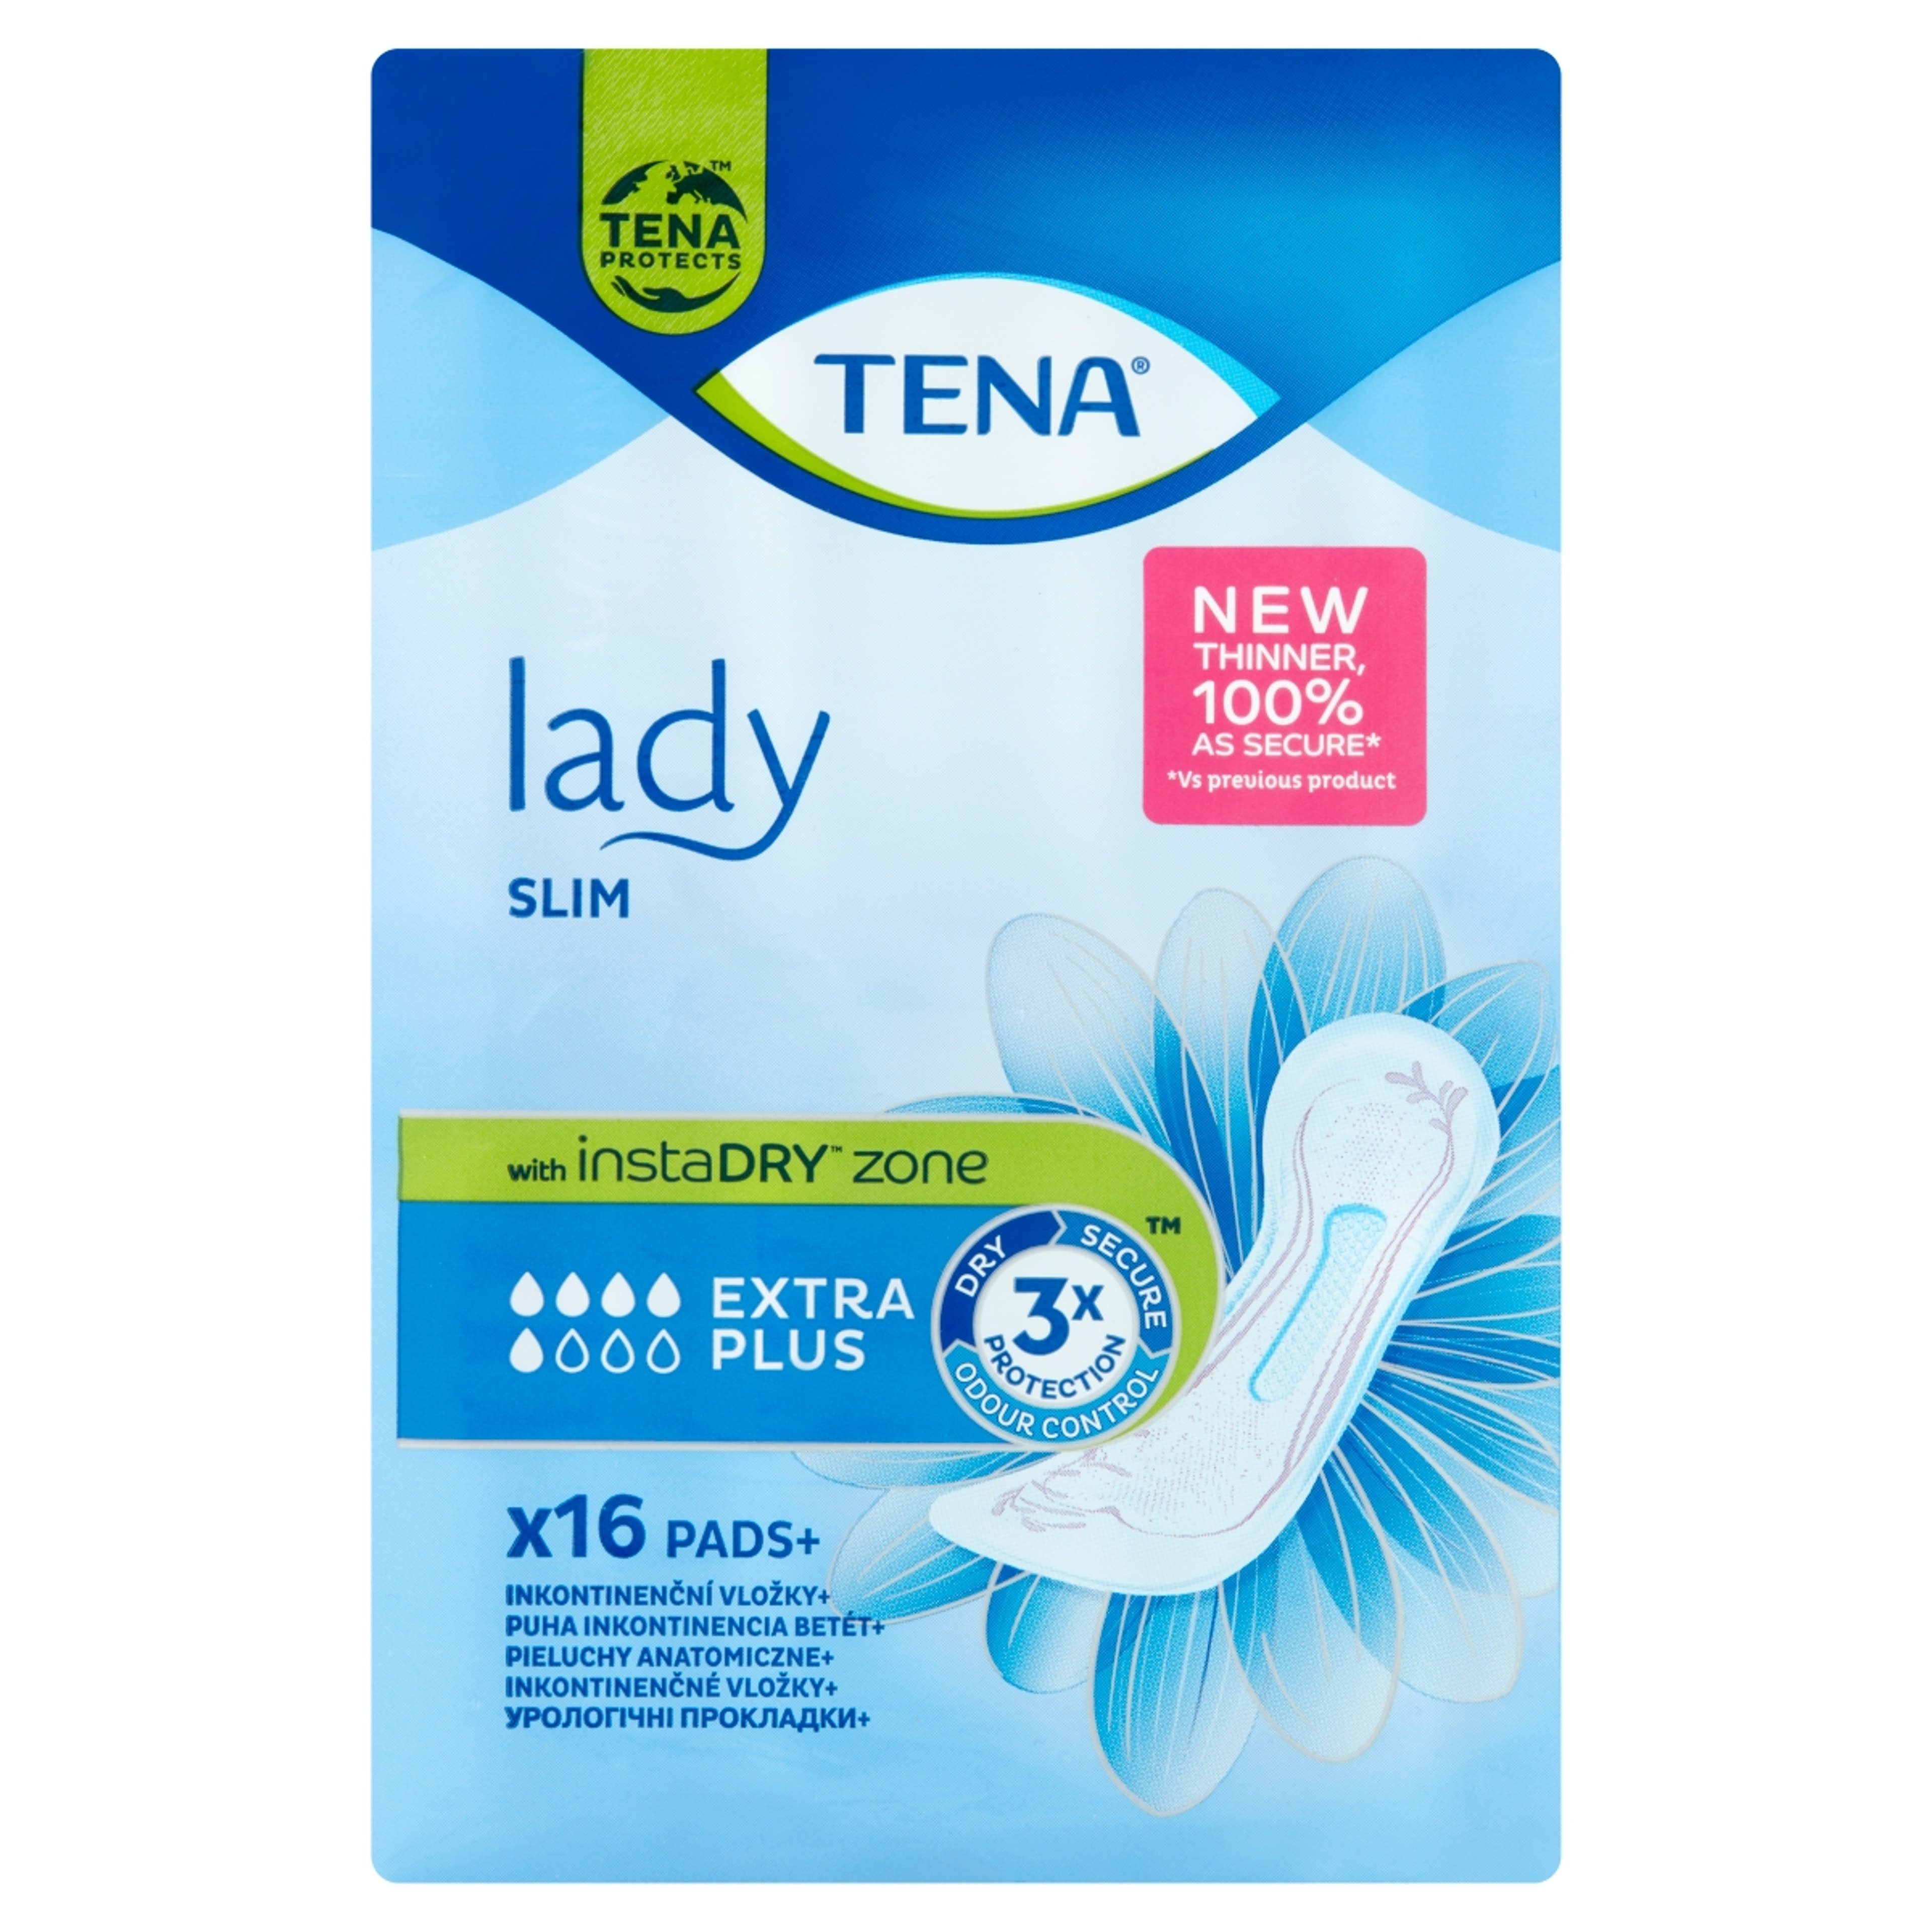 Tena Lady inkontinencia betét extra plus - 16 db-1